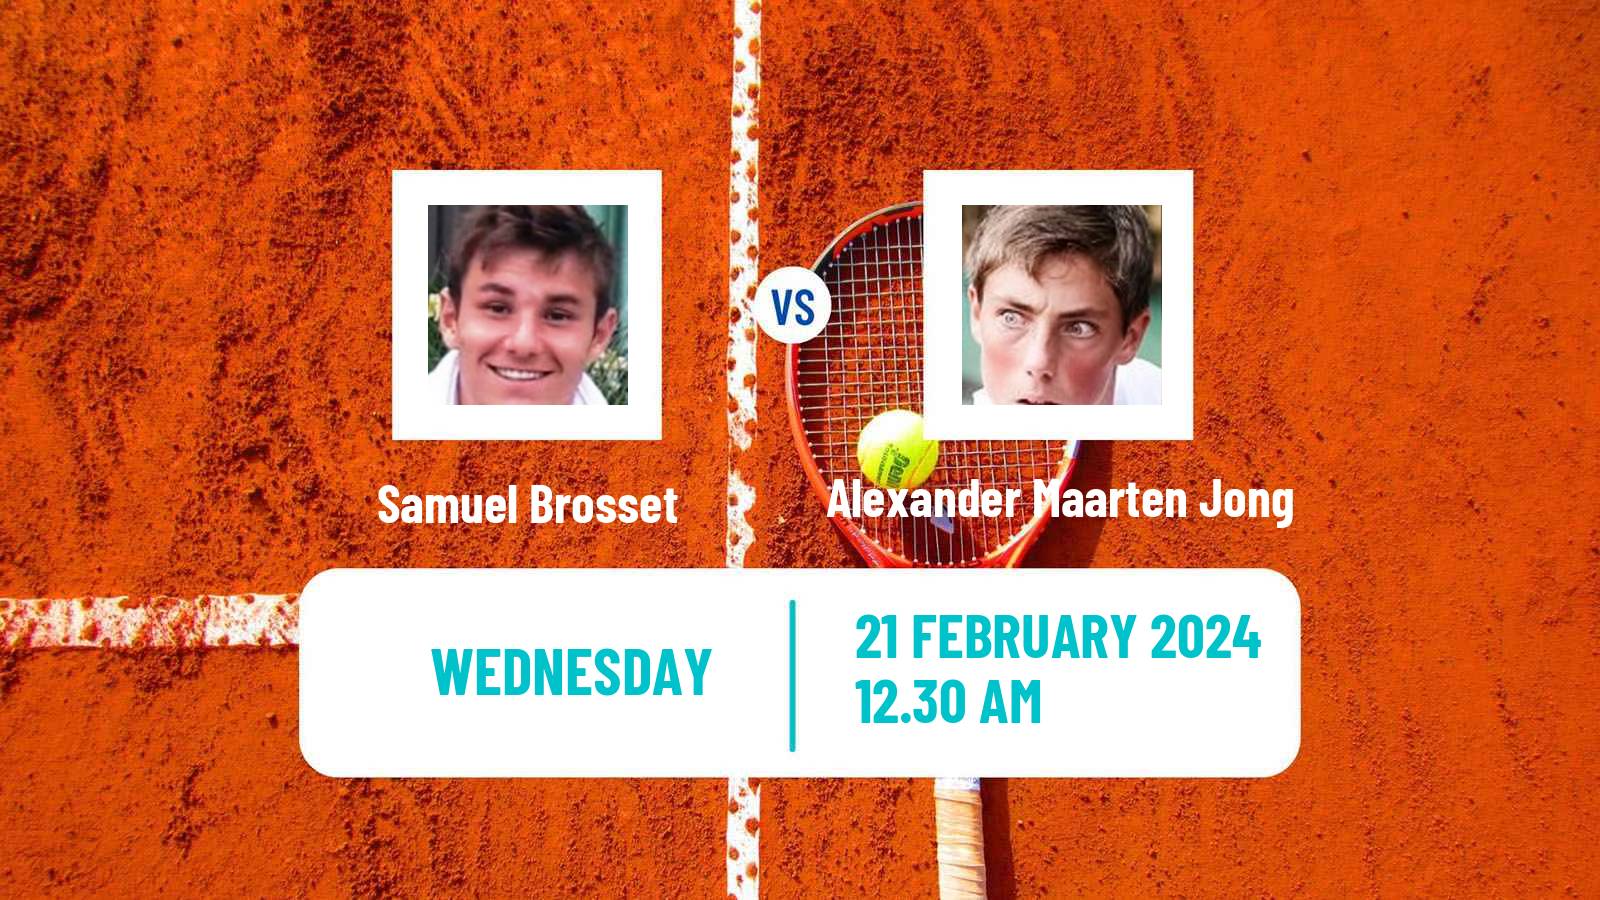 Tennis ITF M15 Nakhon Si Thammarat 2 Men Samuel Brosset - Alexander Maarten Jong